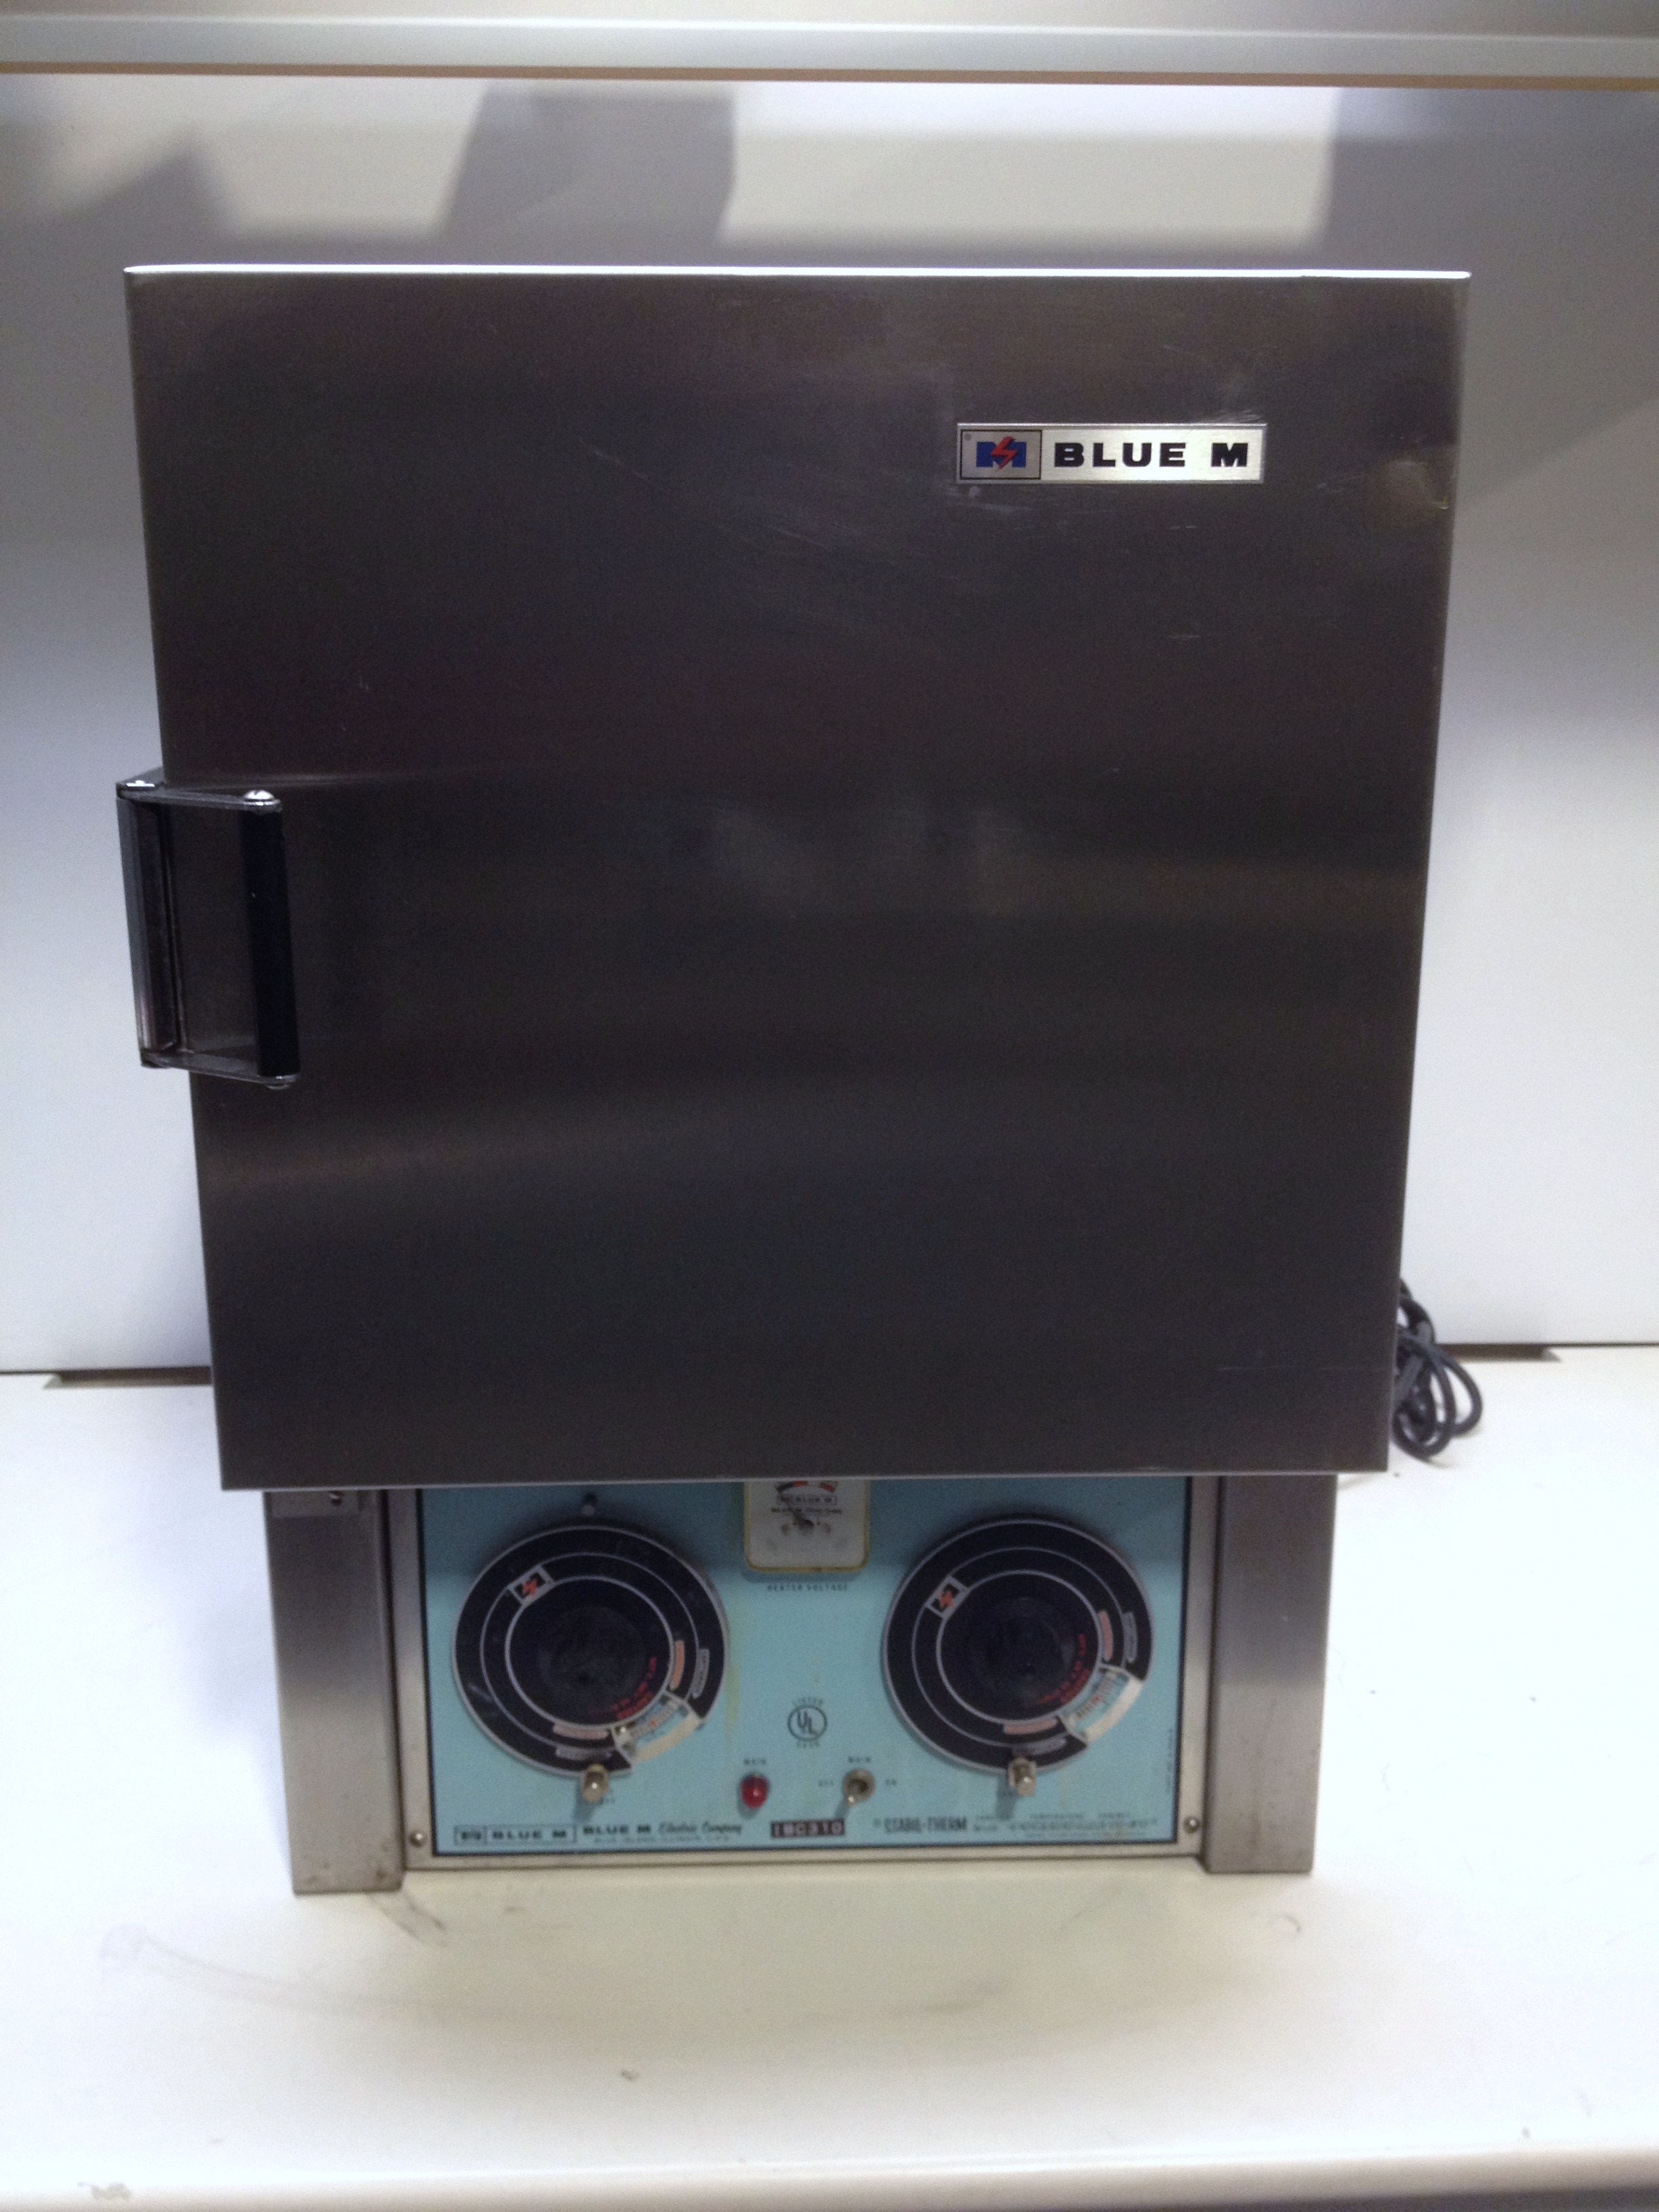 Blue M Oven Model OV-475A-2